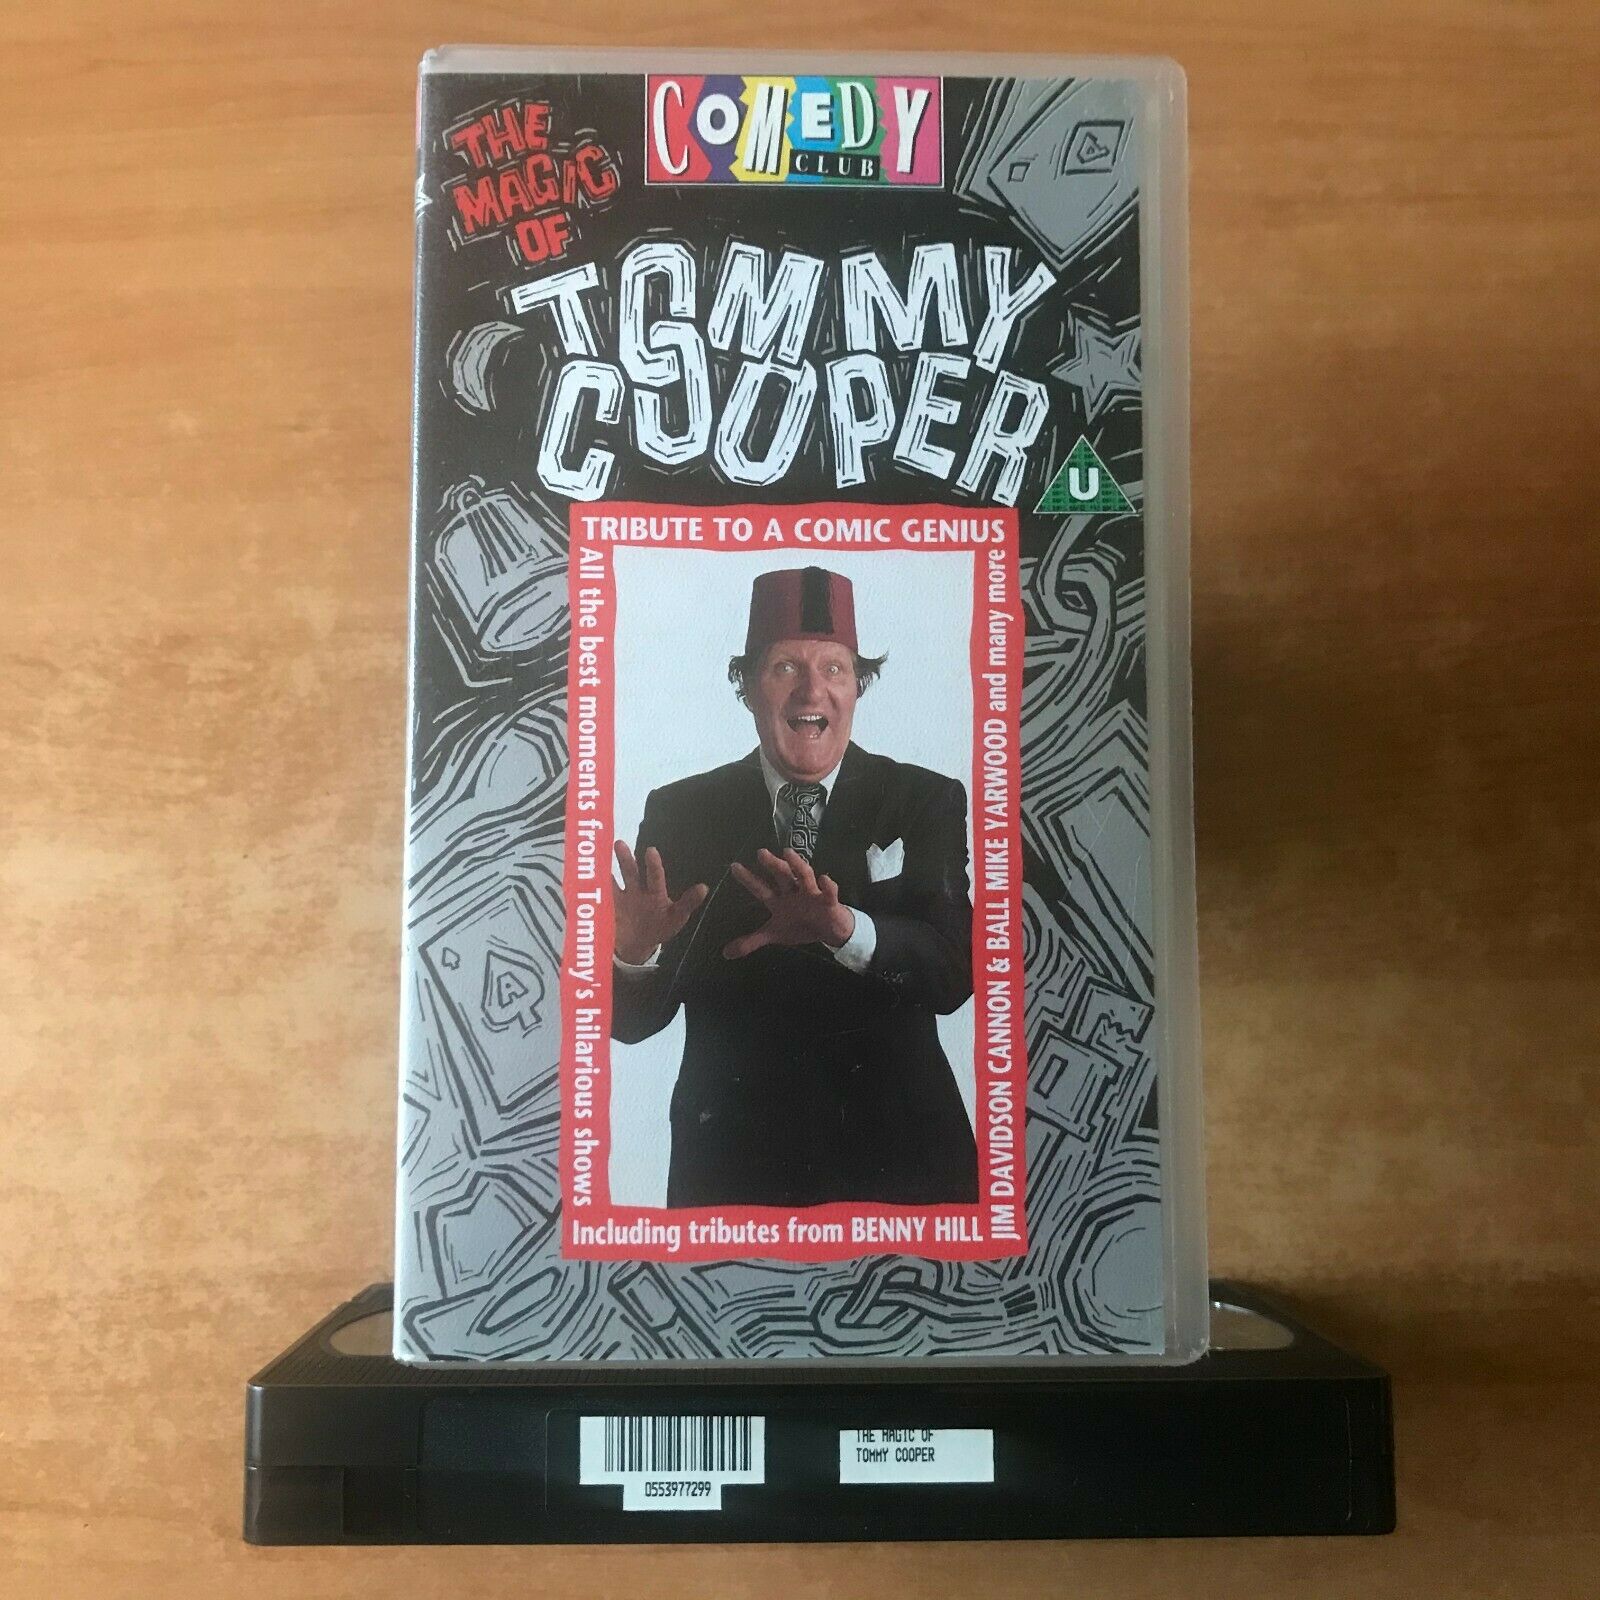 The Magic Of Tommy Cooper; [Comedy Club]: Jim Davidson - Benny Hill - Pal VHS-